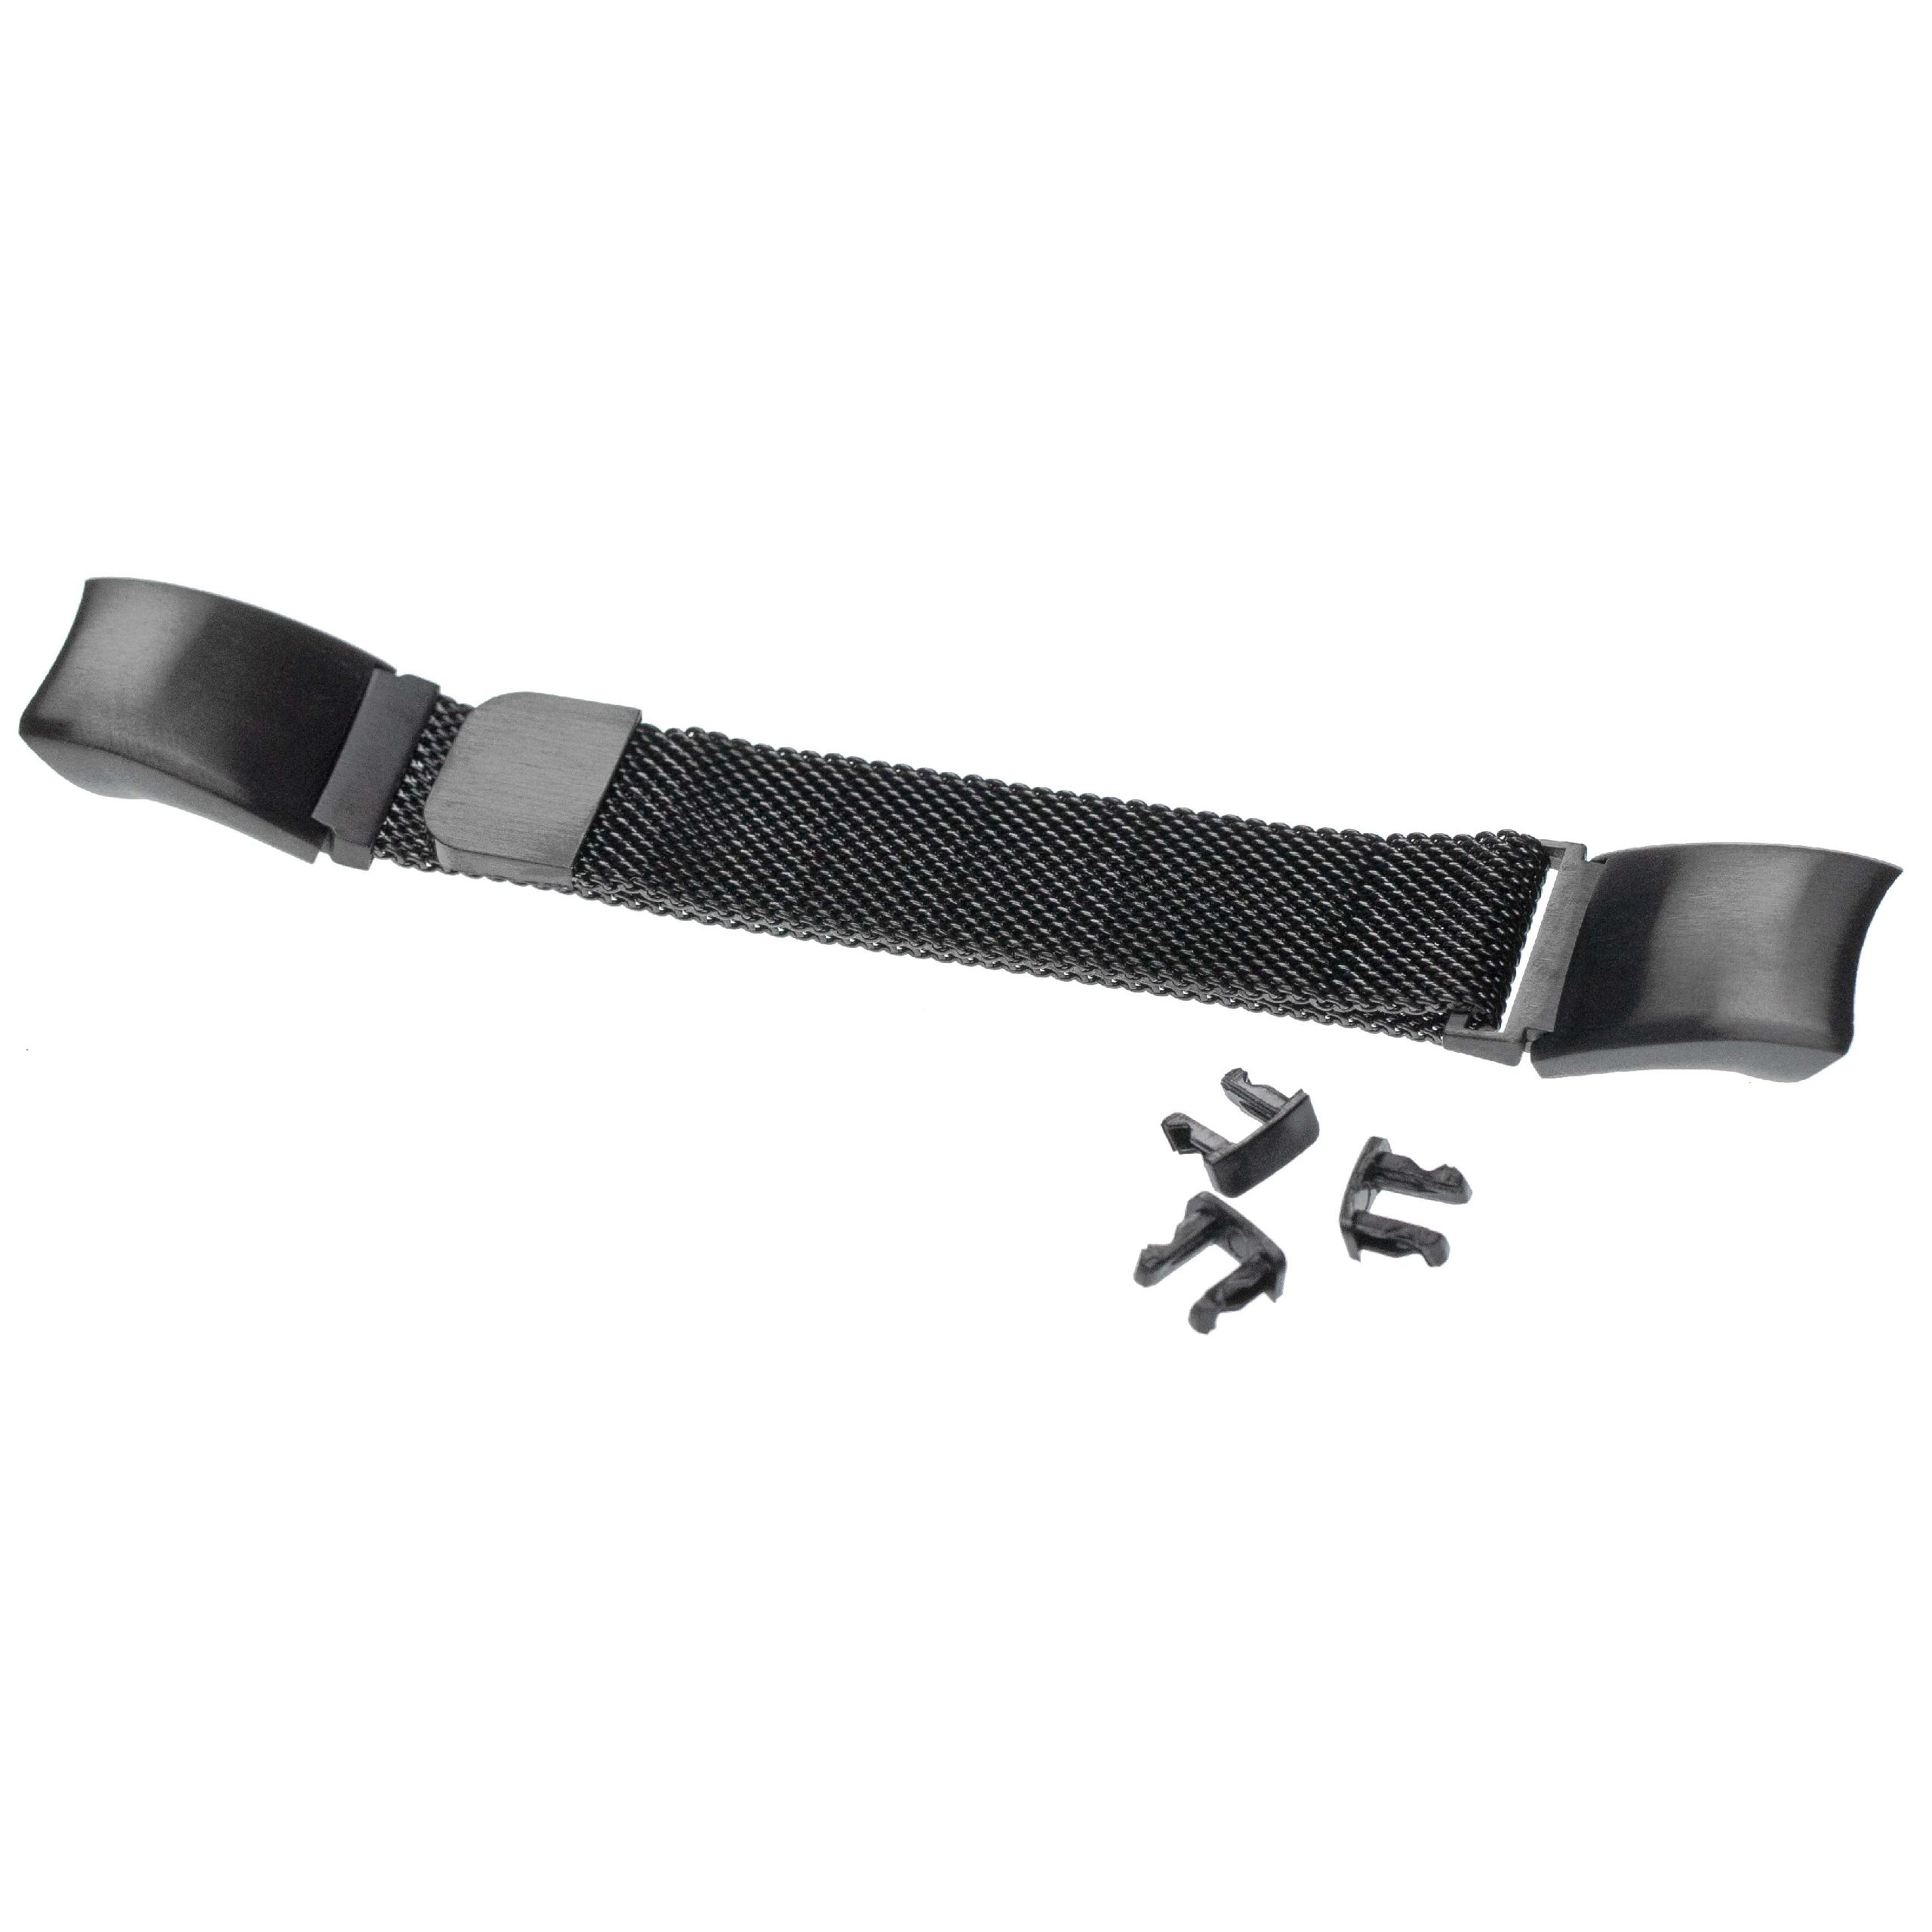 Pasek do smartwatch Huawei Honor Band 4 / Honor Band 5 - dł. 23 cm, szer. 16 mm, stal nierdzewna, czarny